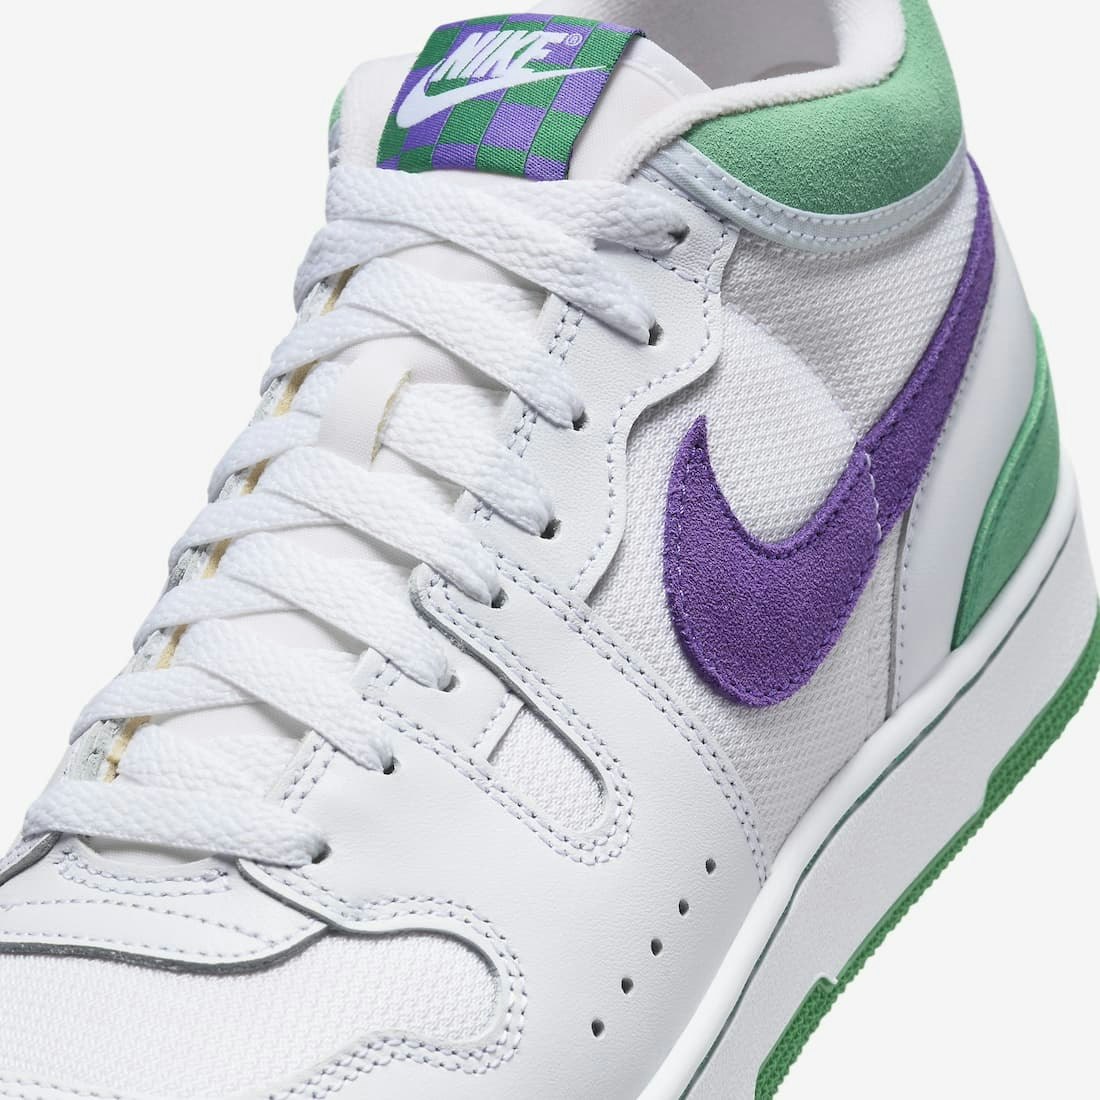 Nike Mac Attack "Wimbledon"